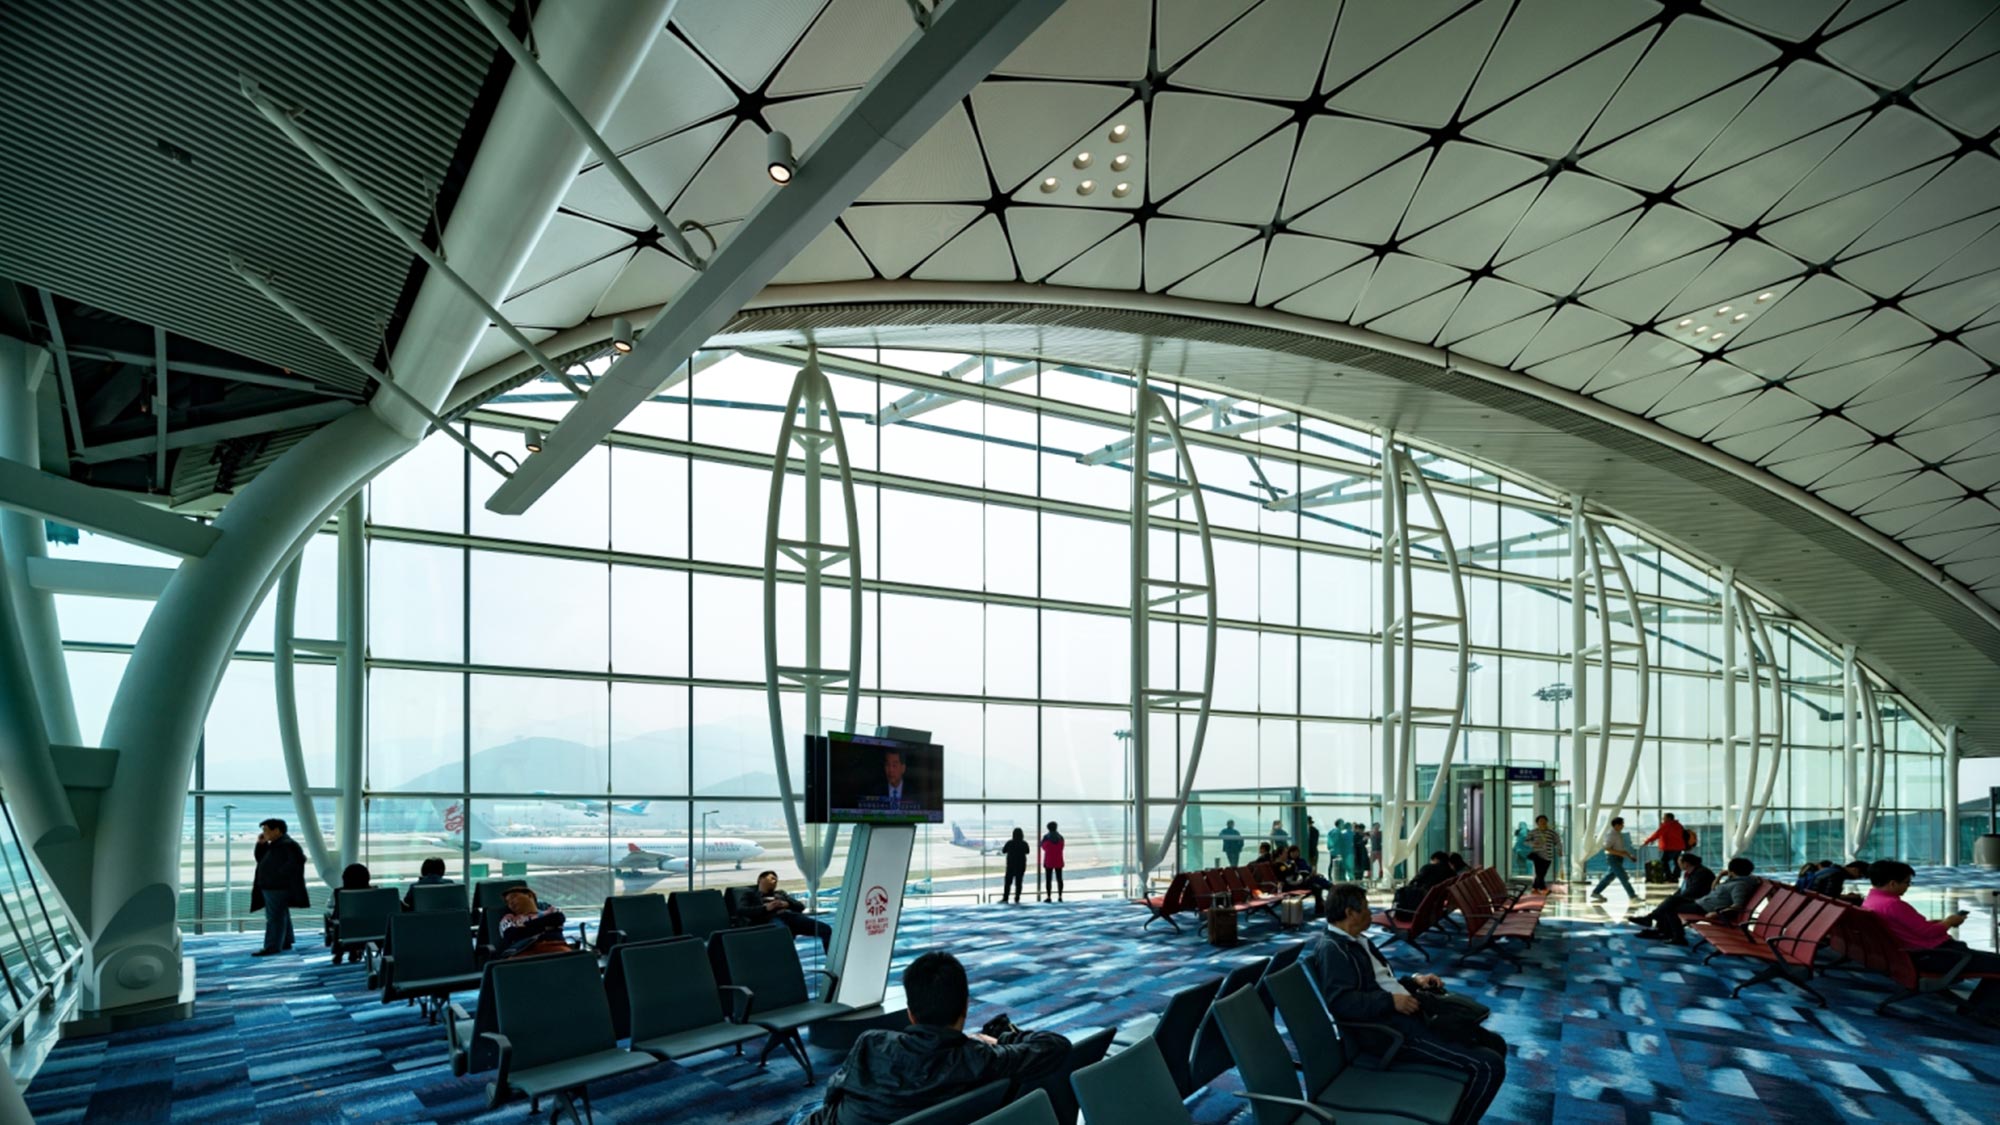 Hong Kong International Airport terminal interior